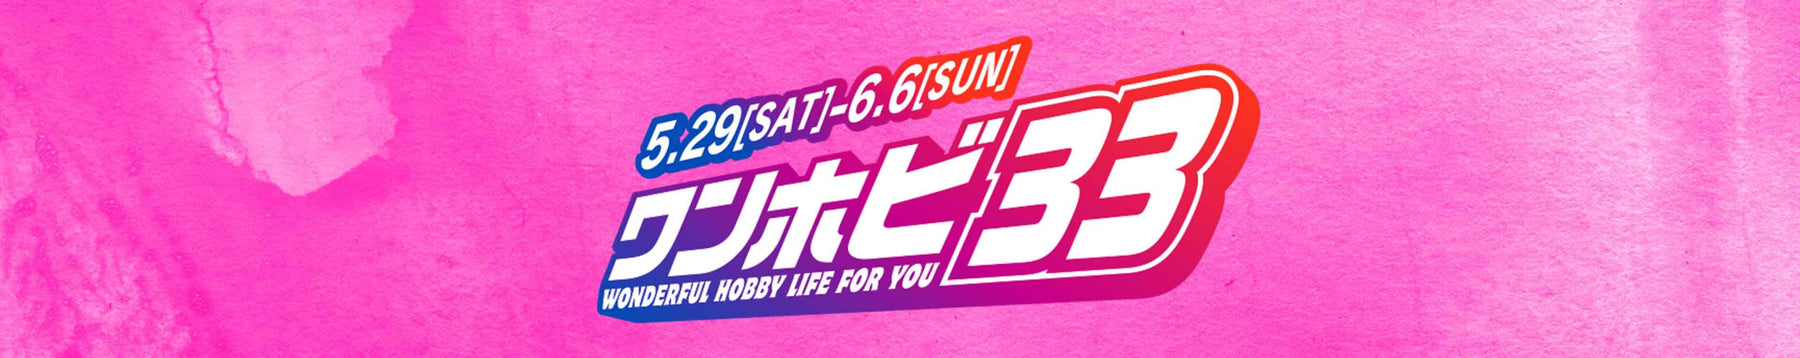 WonHobby33 Reveals! - Hobby Ultra Ltd